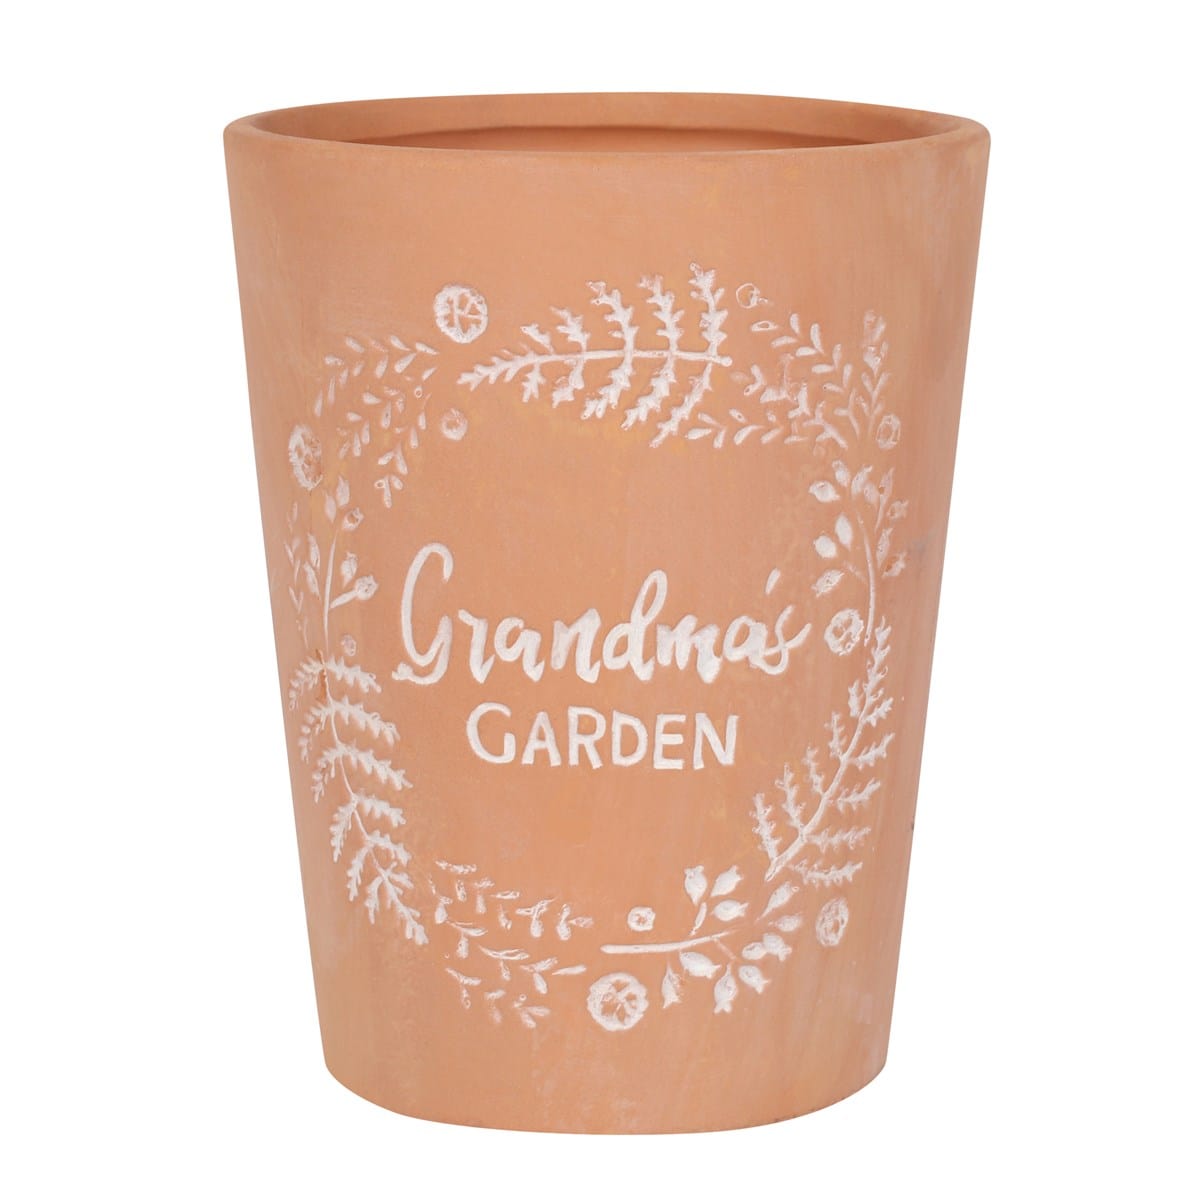 Something Different Home accessories Grandma's Garden Terracotta Plant Pot